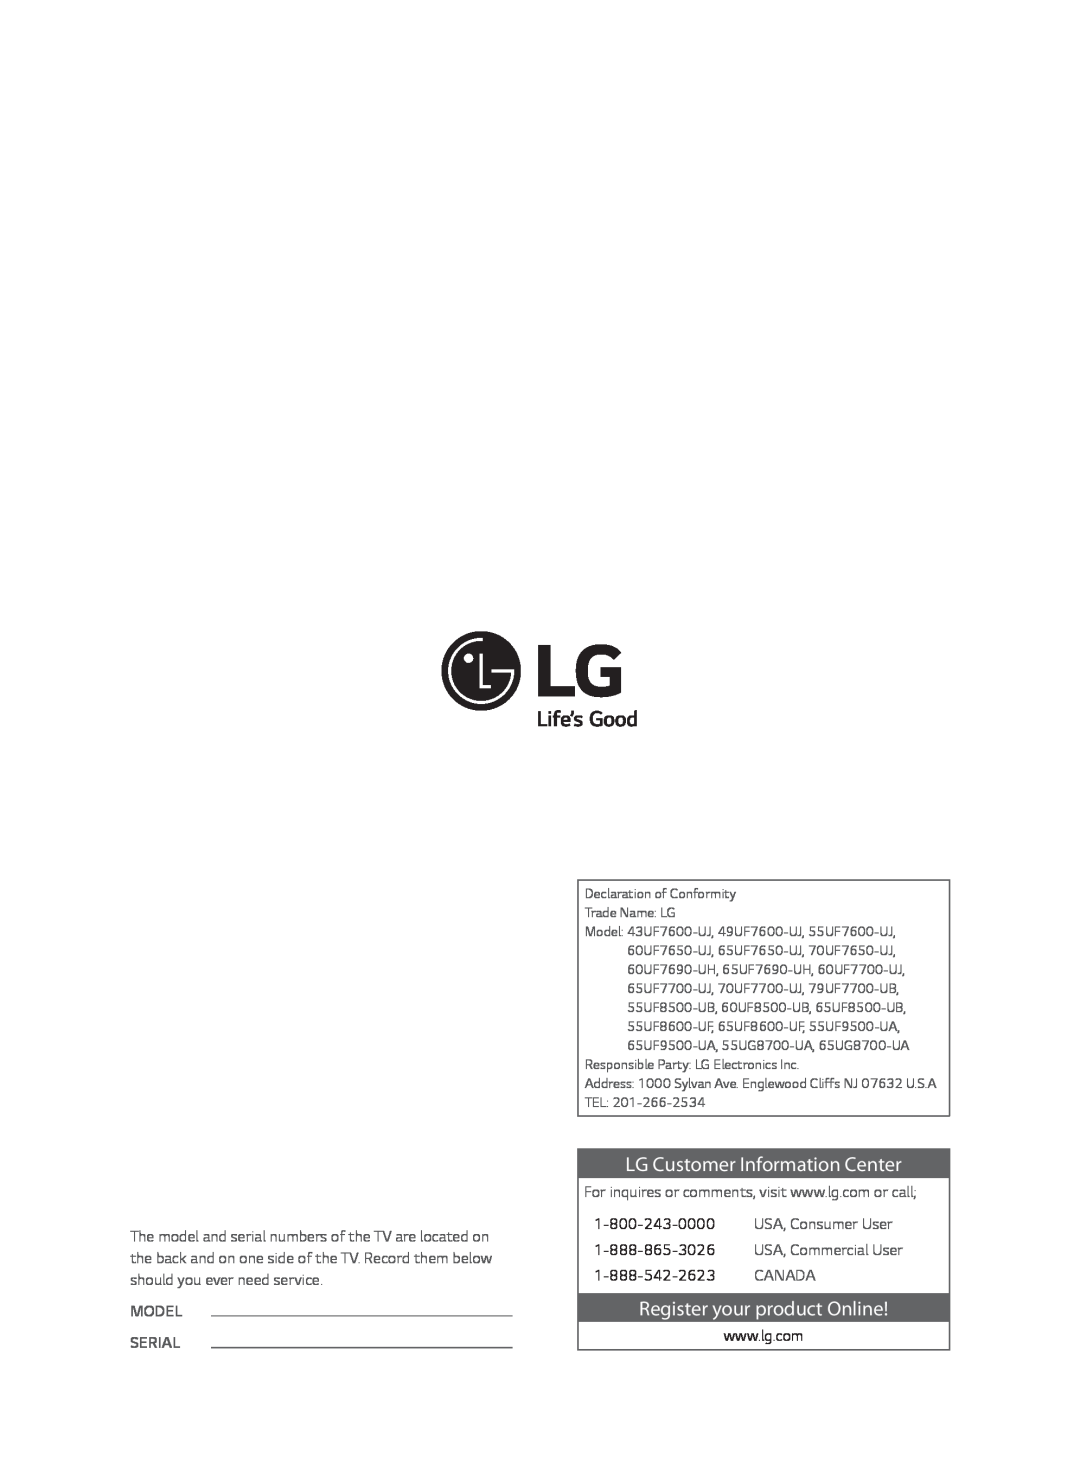 LG Electronics 60UF7700, 49UF7600 LG Customer Information Center, Register your product Online, Model Serial, Canada 